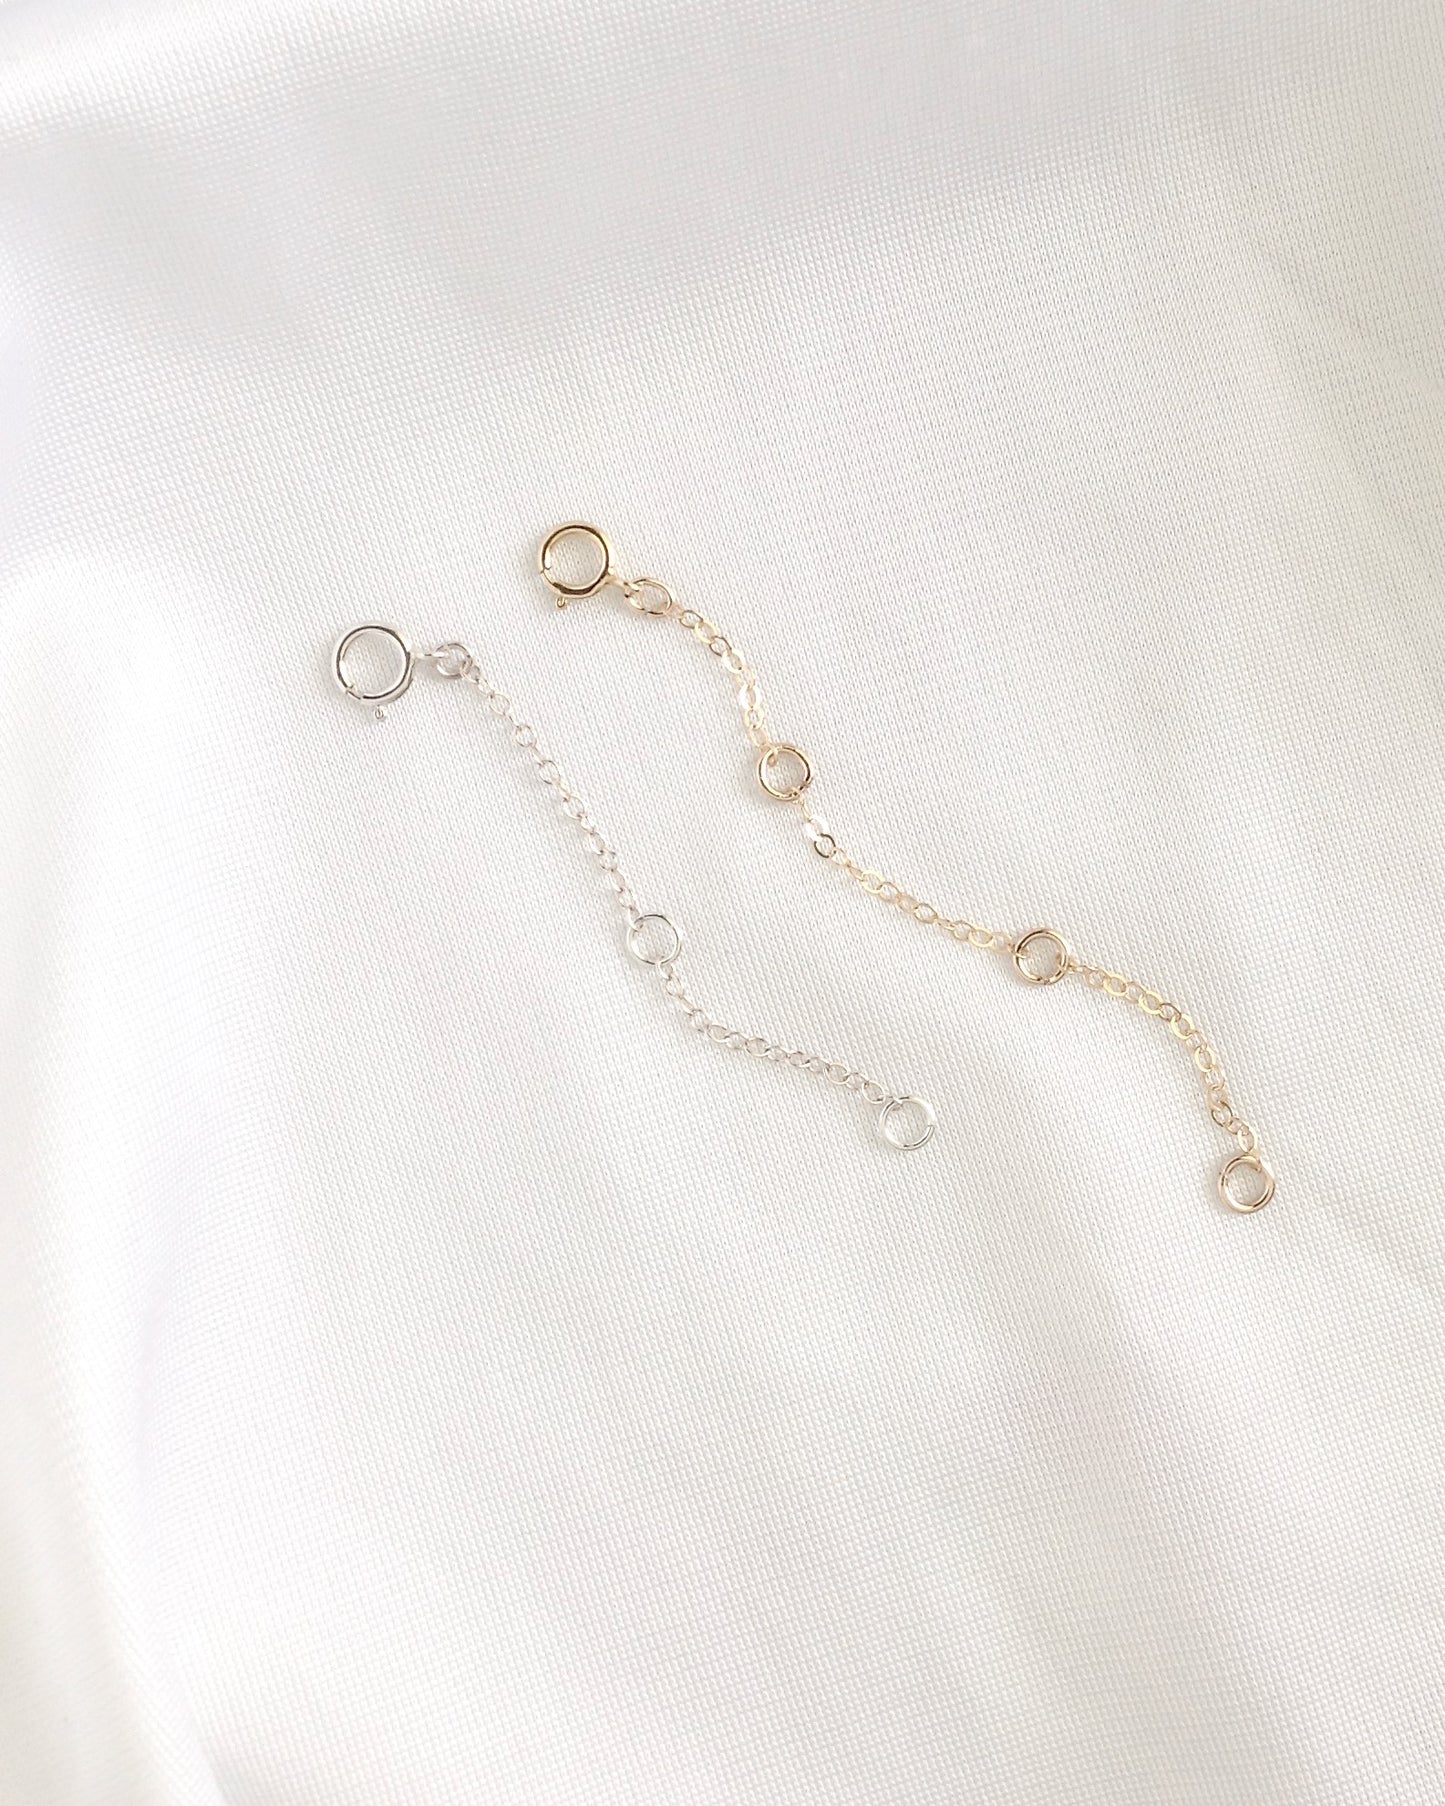 White Gold Extender Sterling Silver Necklace Bracelet Extenders（1